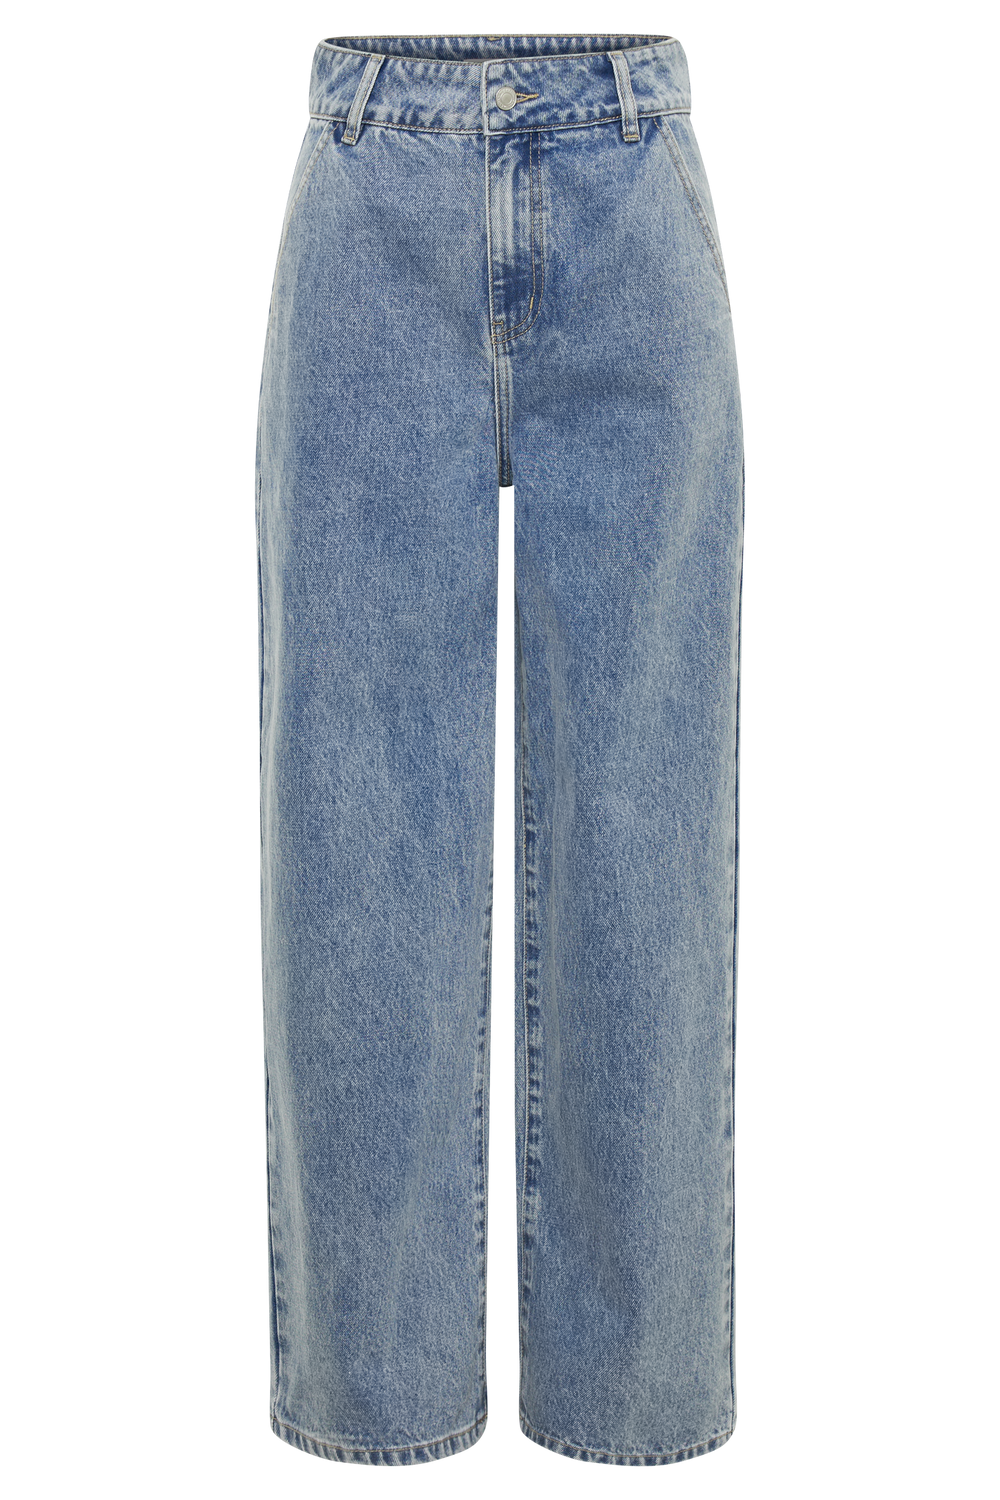 Roxy Wide Leg High Waist Denim Jeans - Vintage Blue